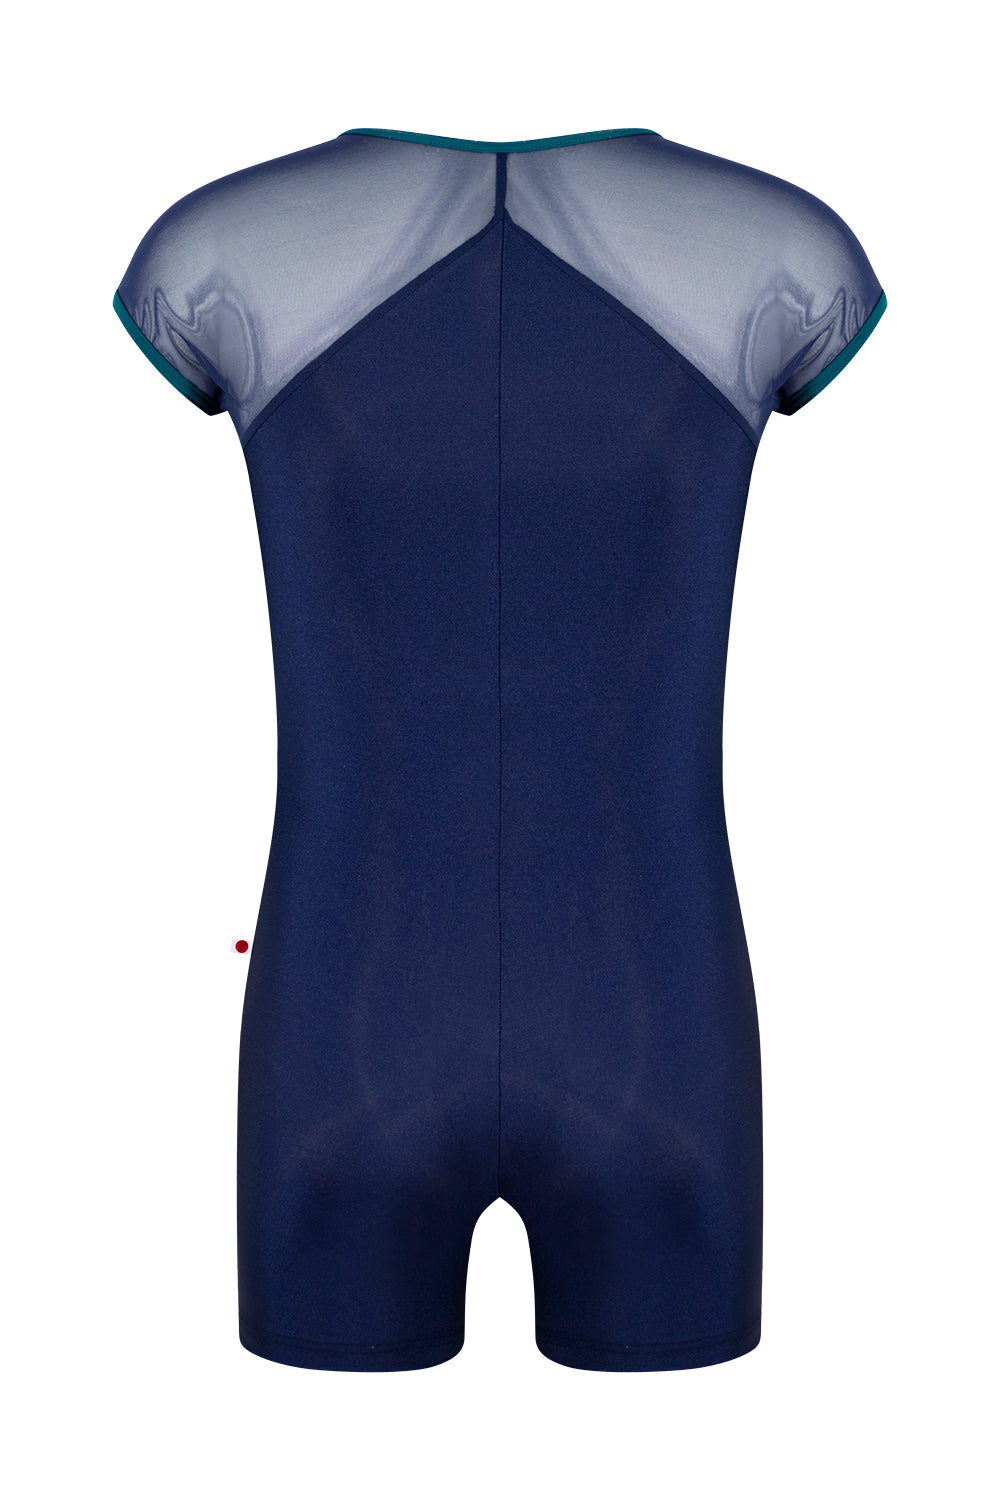 Daniil semi-unitard in N-Dark Blue body color with Mesh Dark Blue top color and T-Zenith trim & zipper color